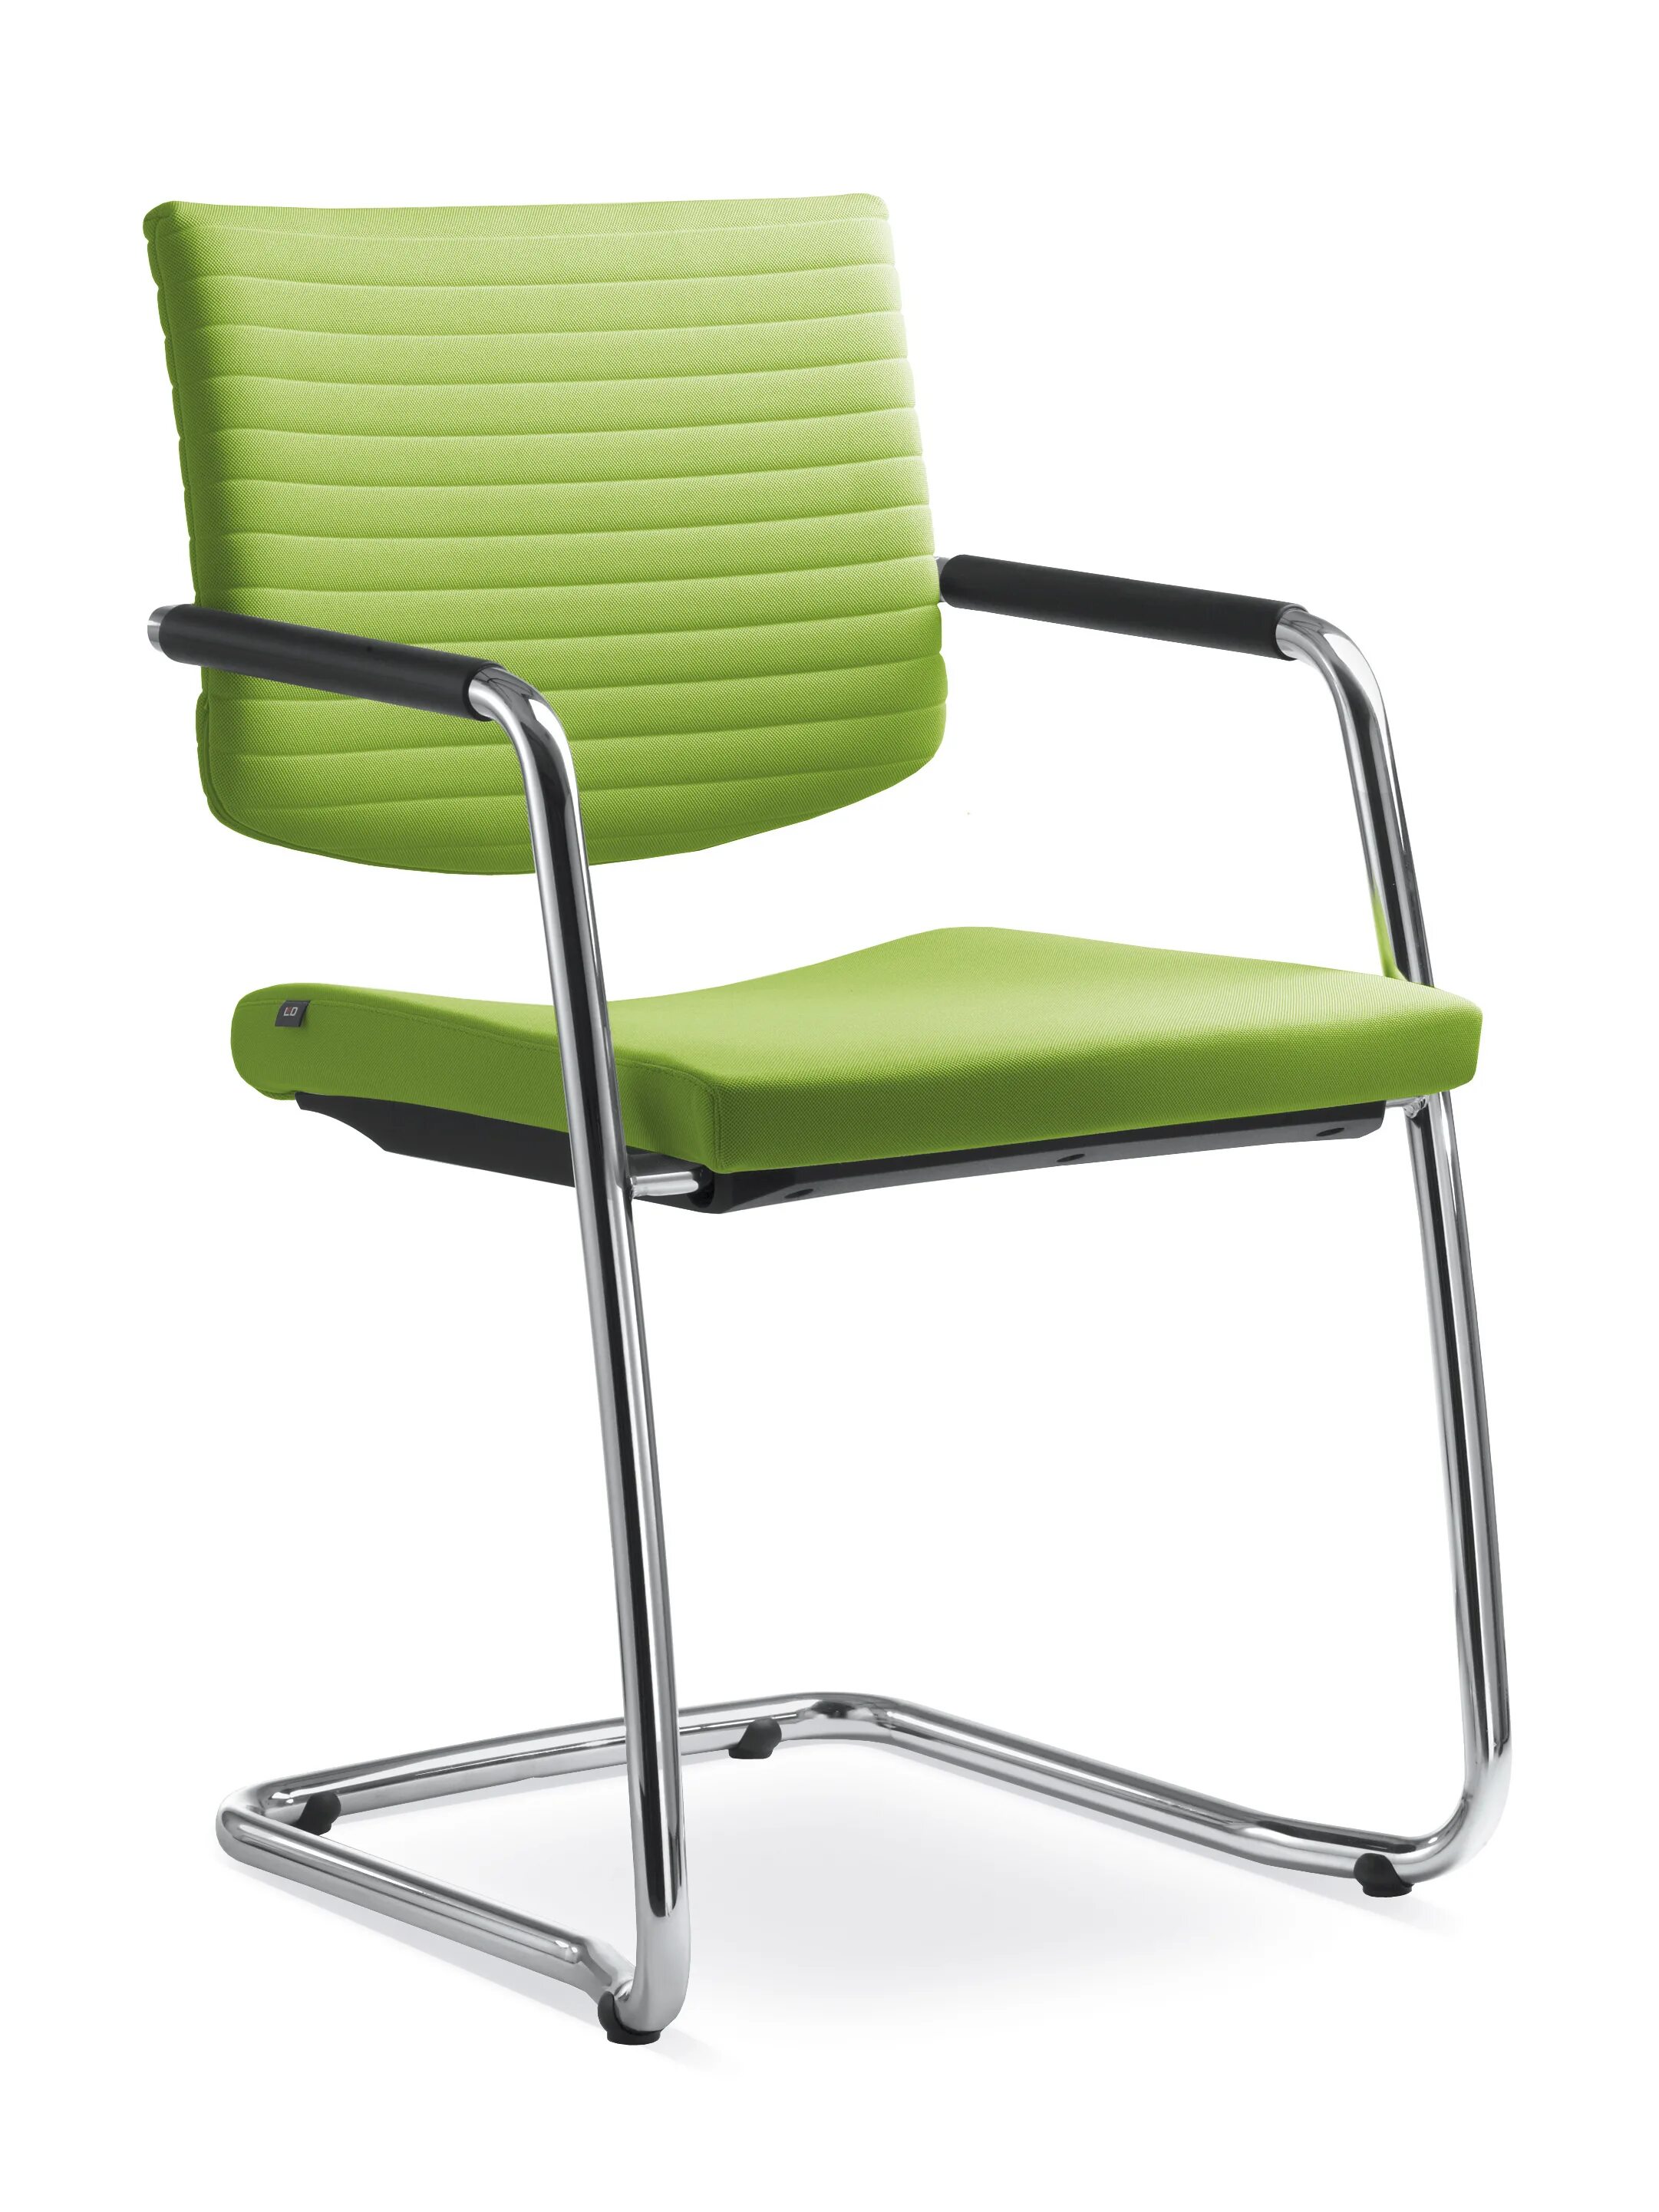 Ld43894 кресло. Кресло element. Стул офисный. Стул офисный зелёный.